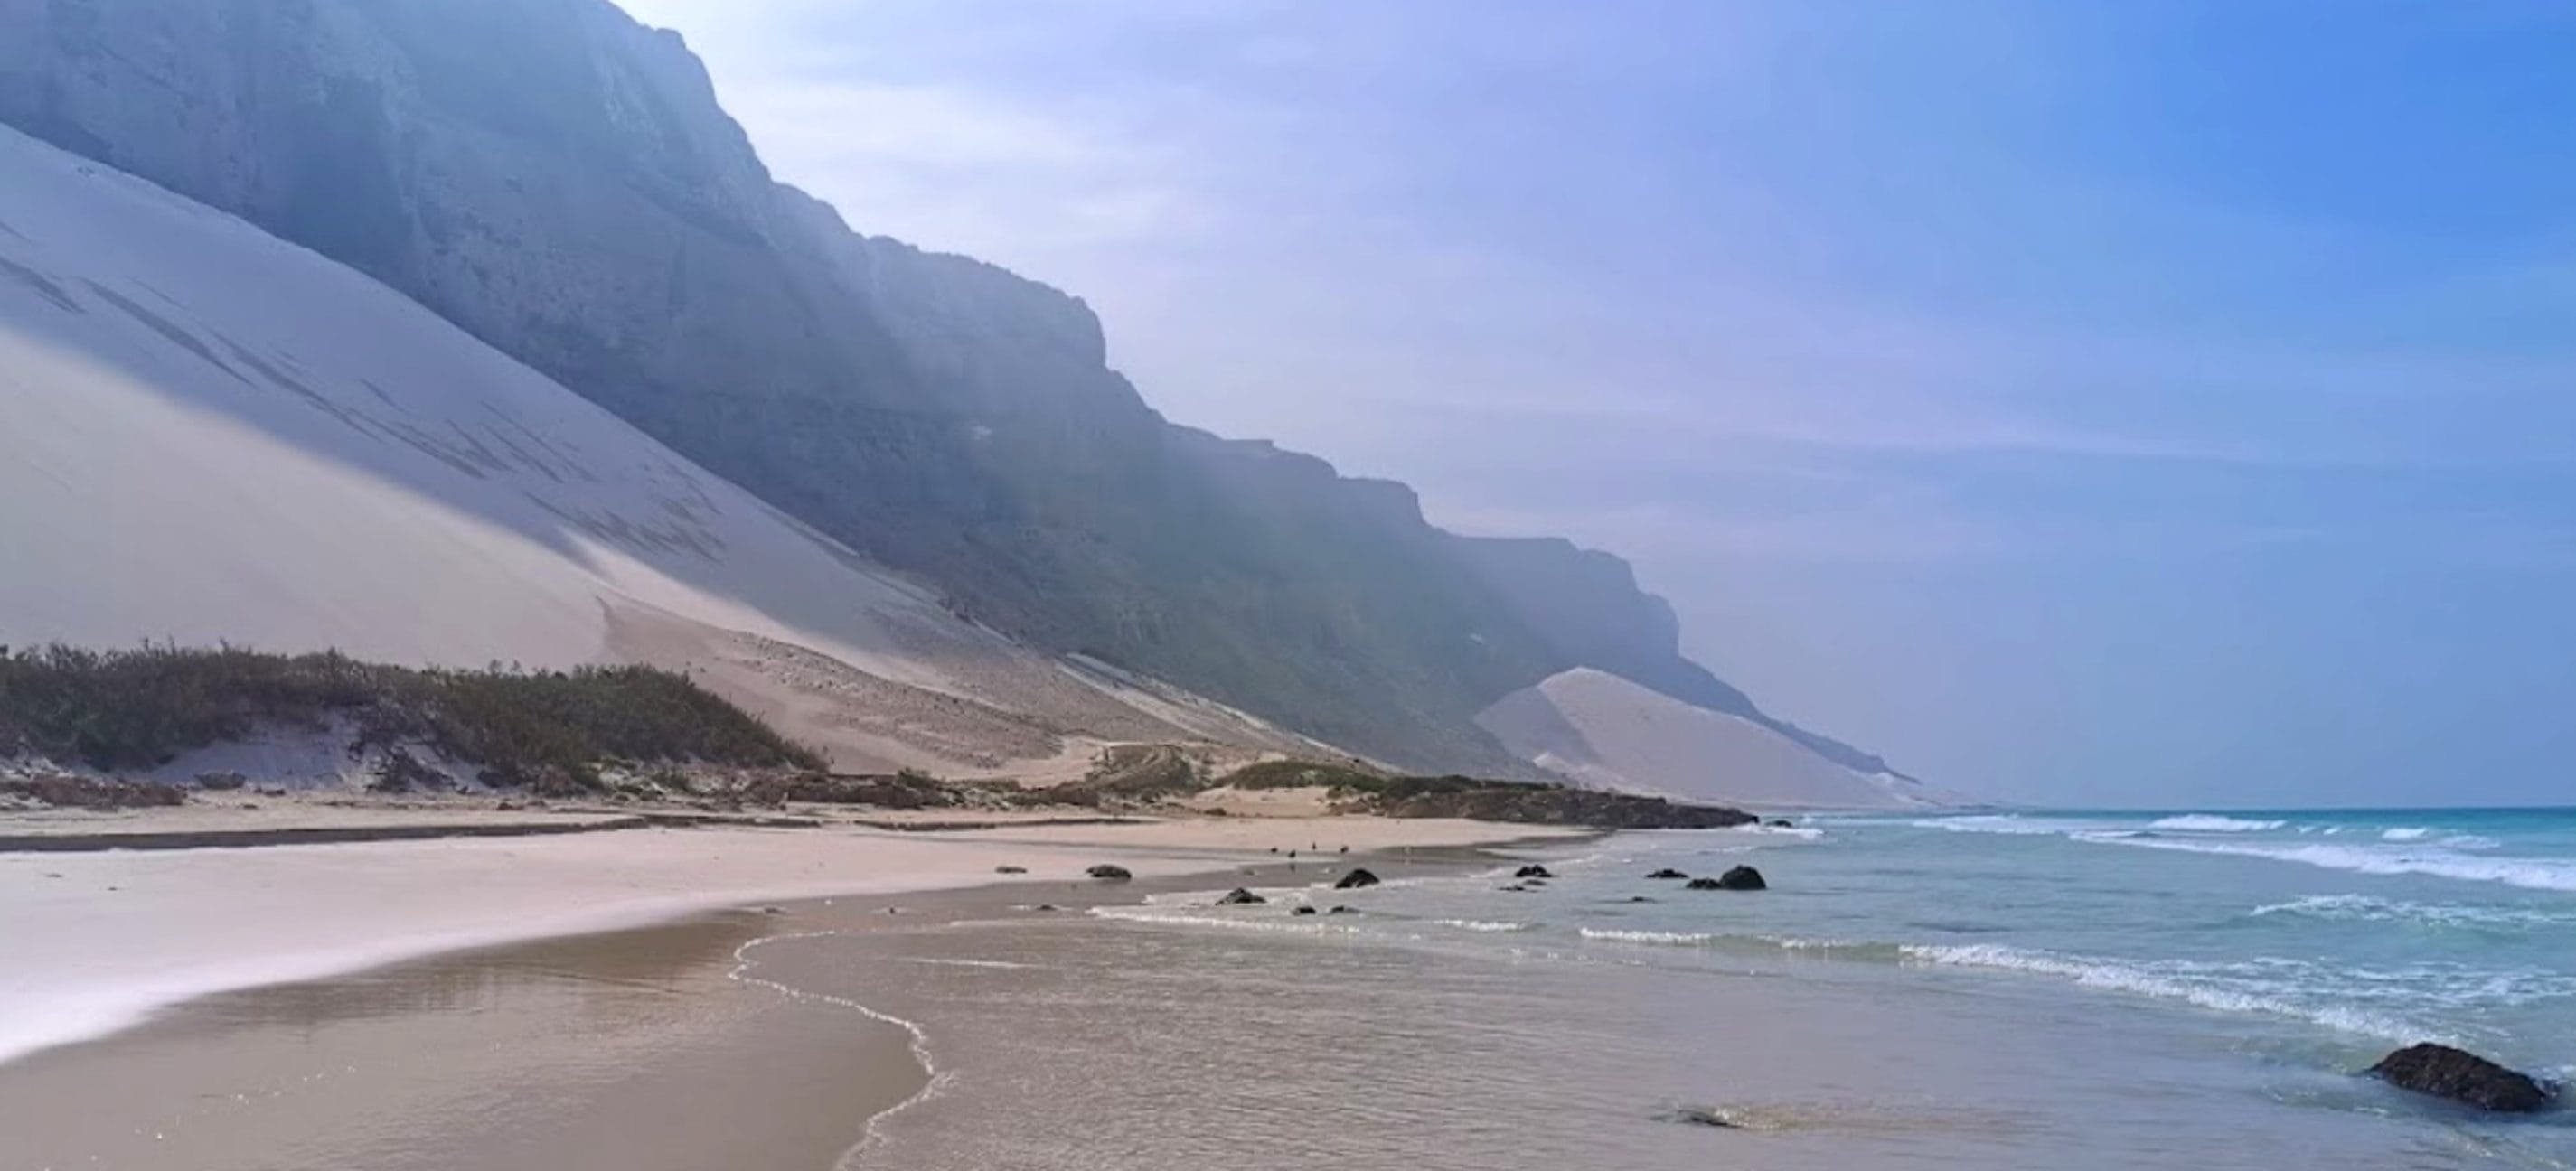 Dunas de areia branca na praia de Ahrer, Socotra